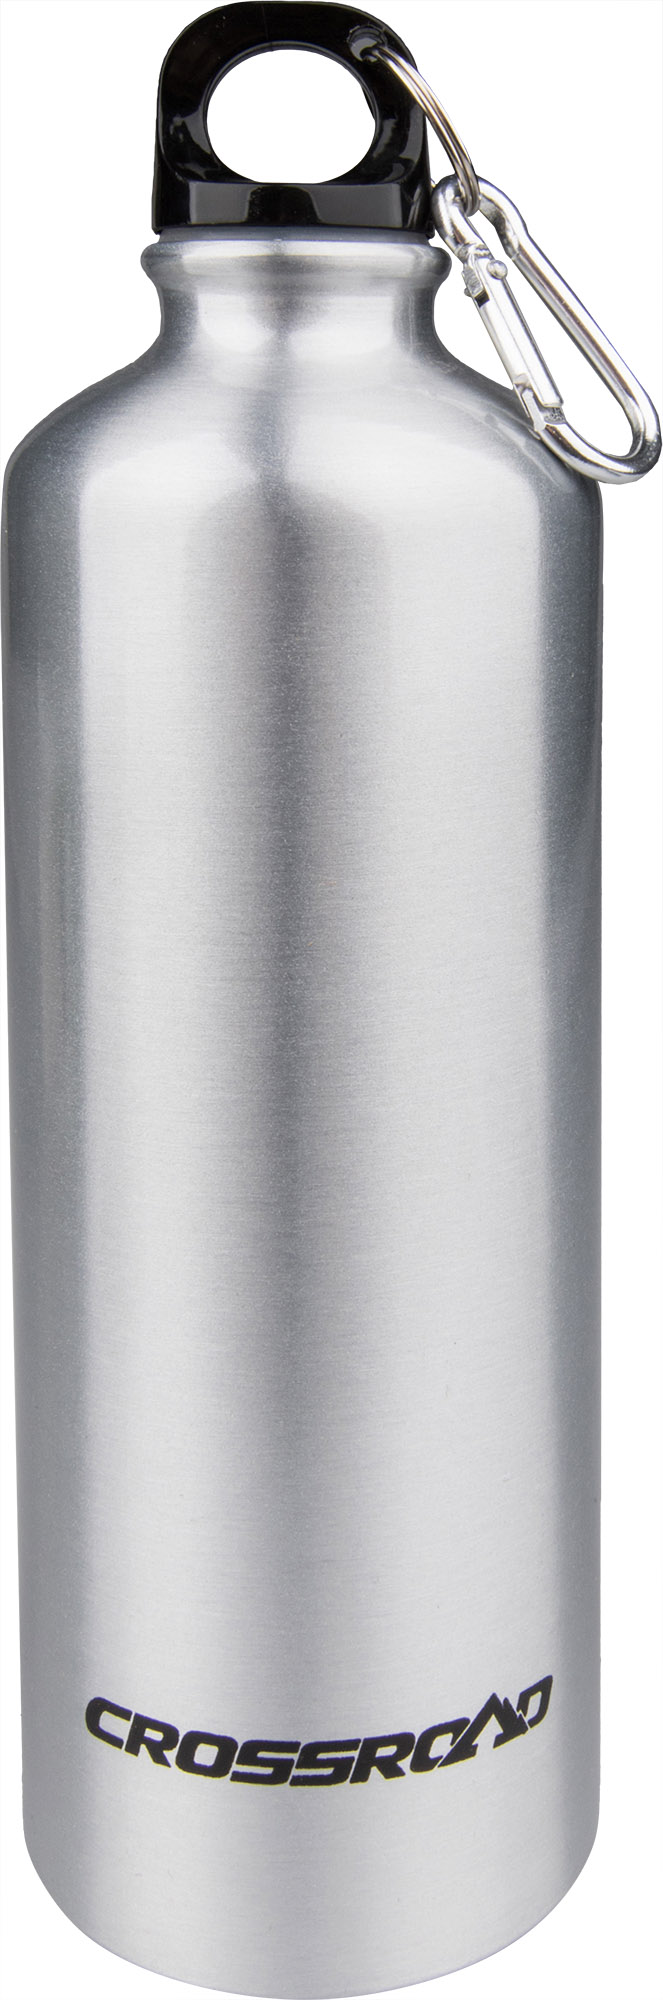 Aluminium flask